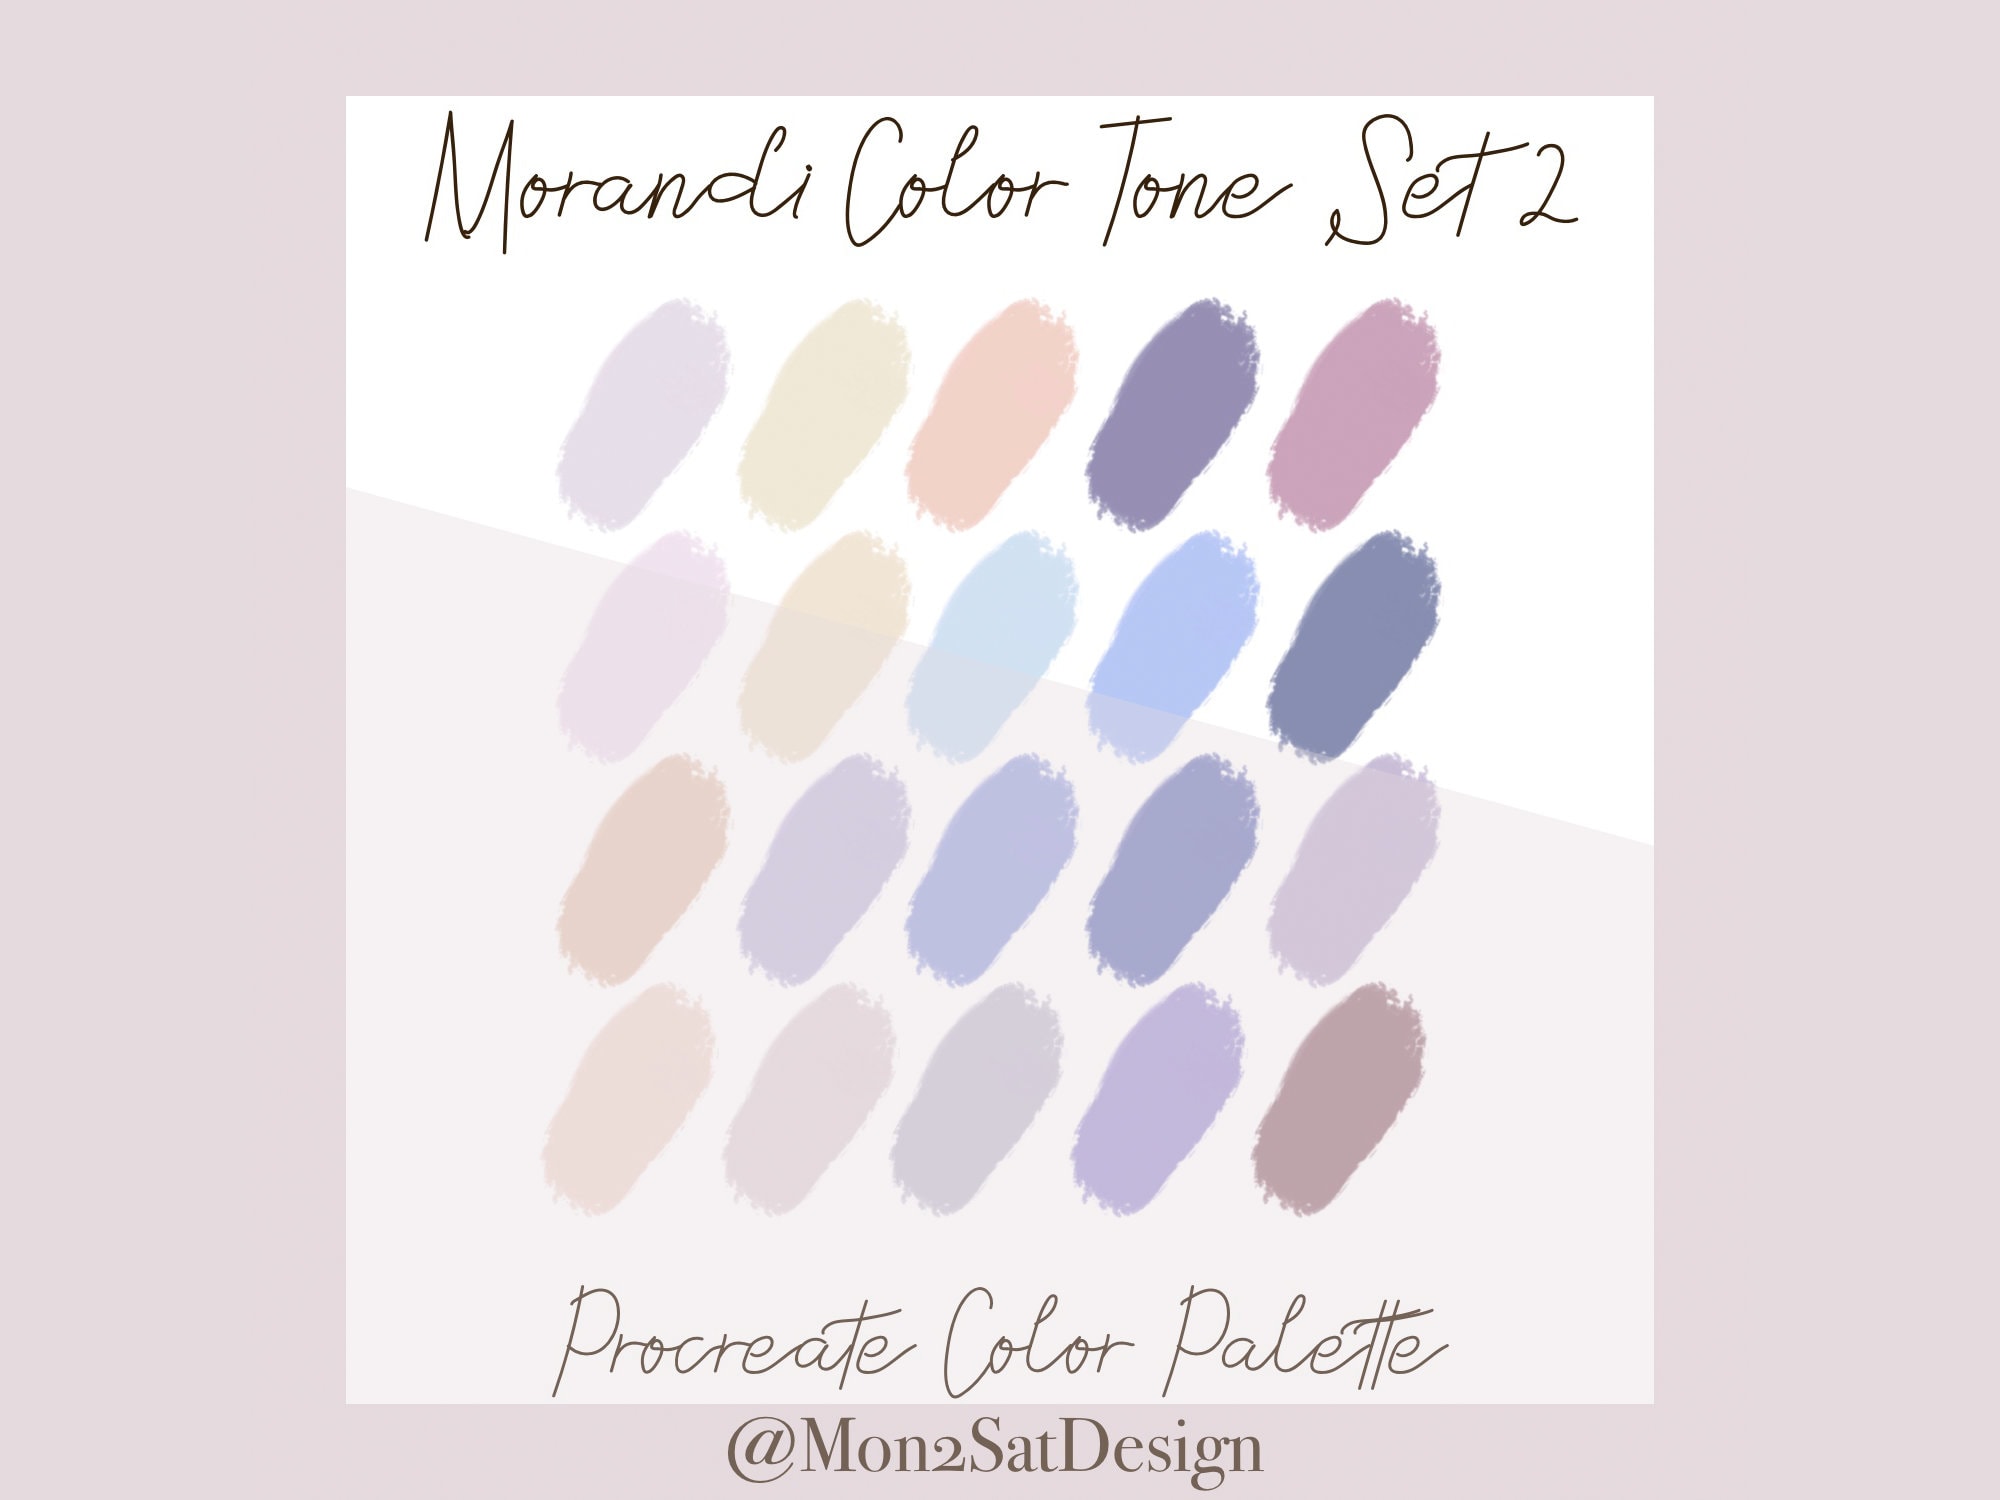 Morandi Color Nail Polish Set - wide 8